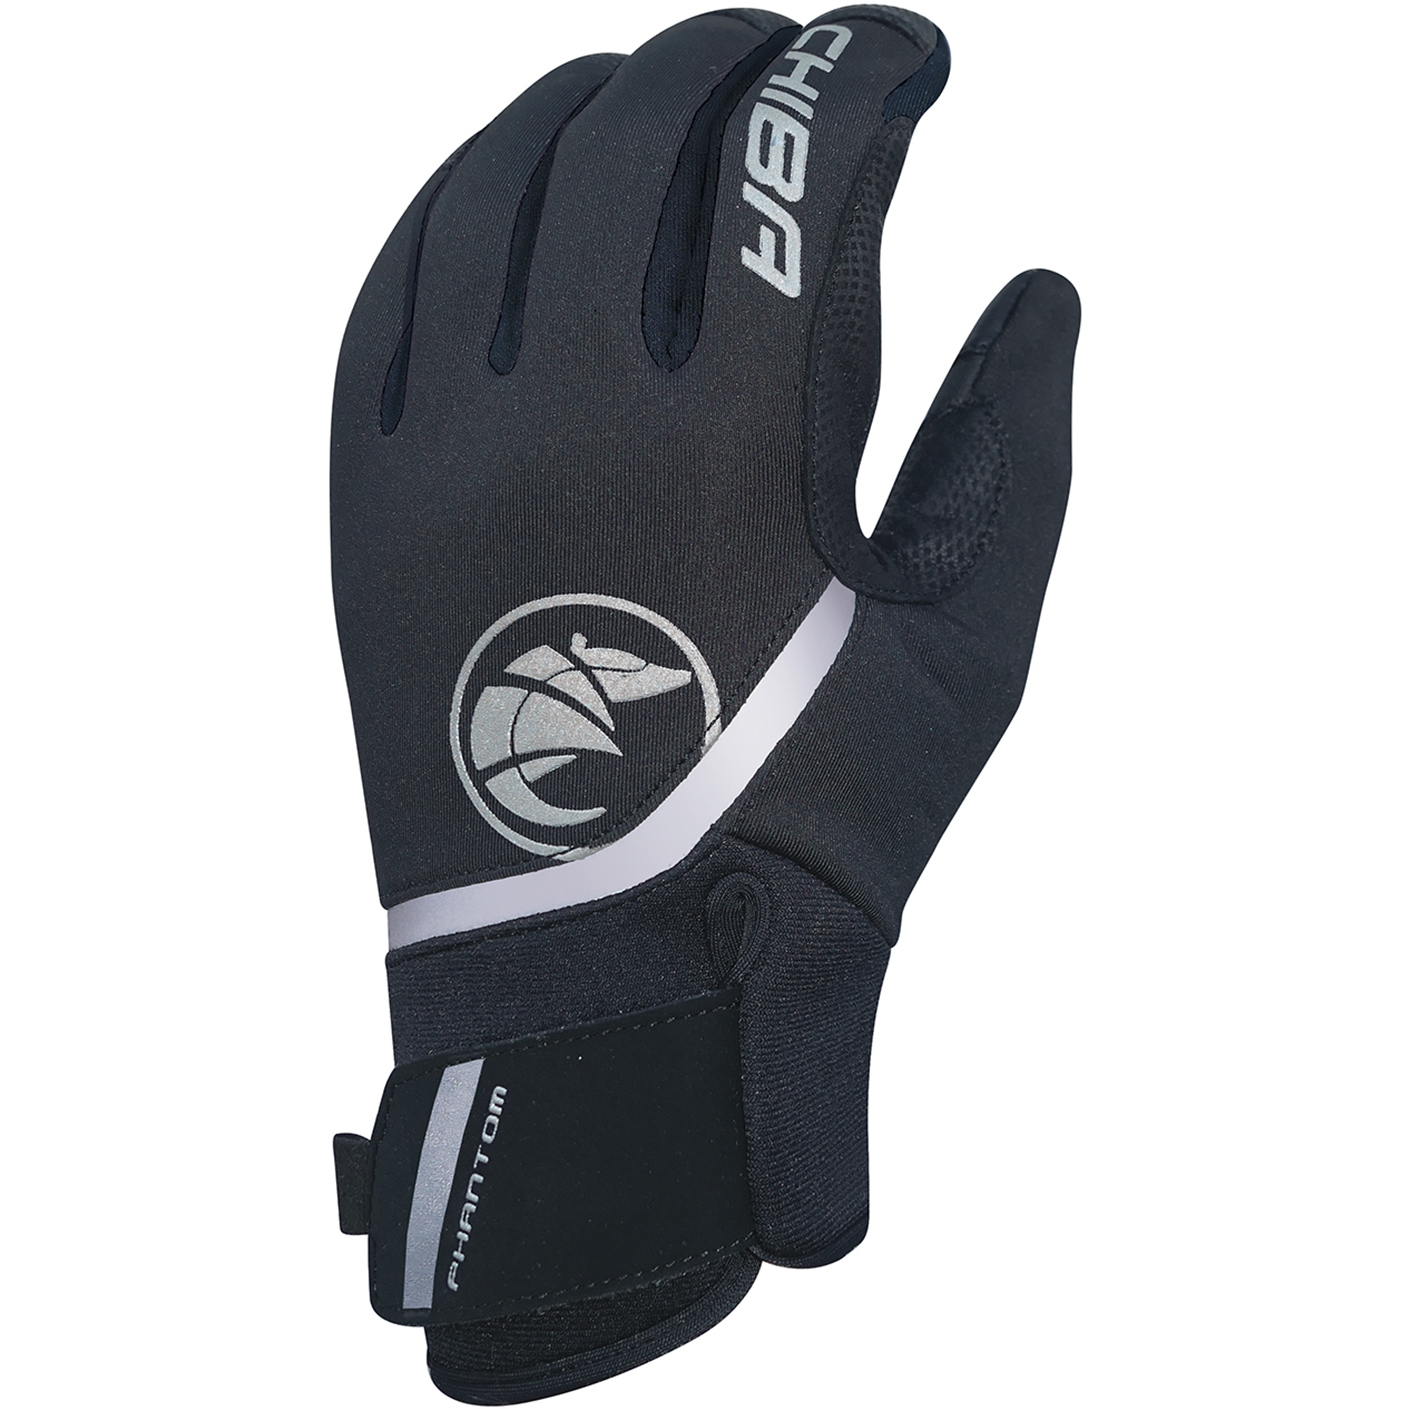 Picture of Chiba Phantom Light Cycling Gloves - black/black